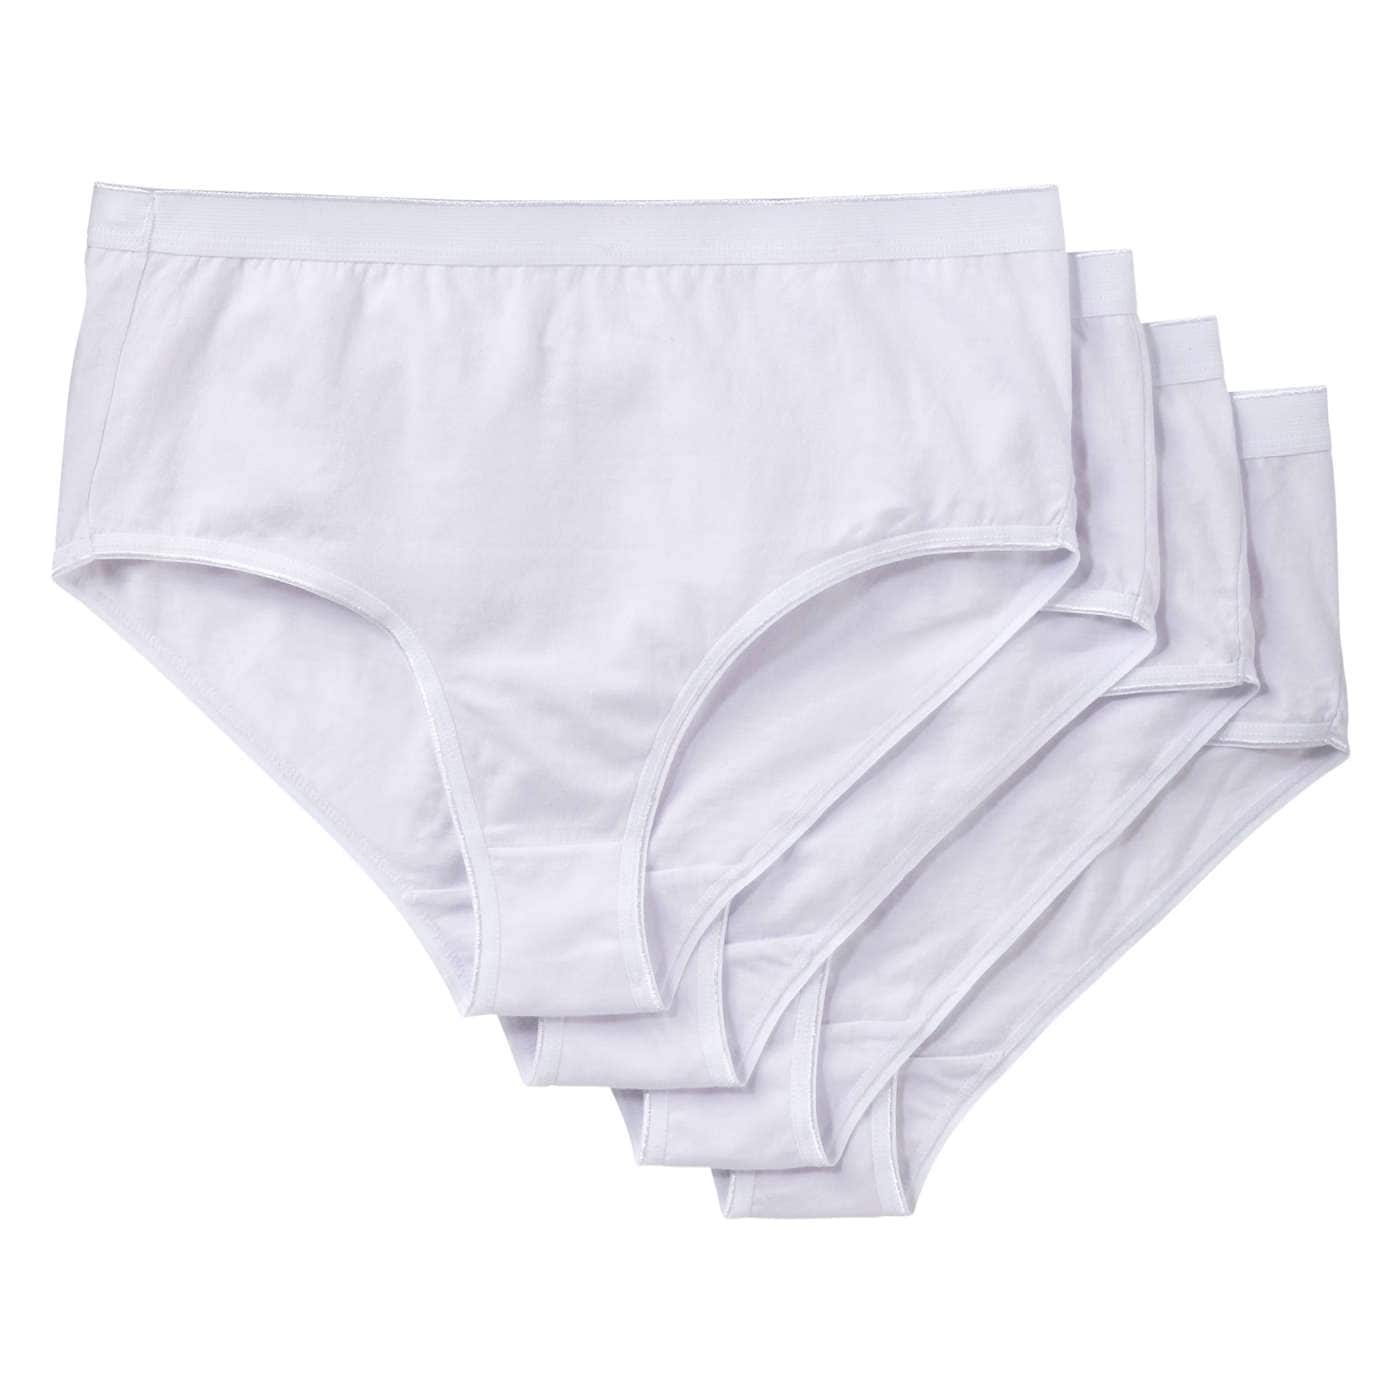 Womens Underwear Joe Boxer Thong Low Rise Panties Cotton 6 Pack